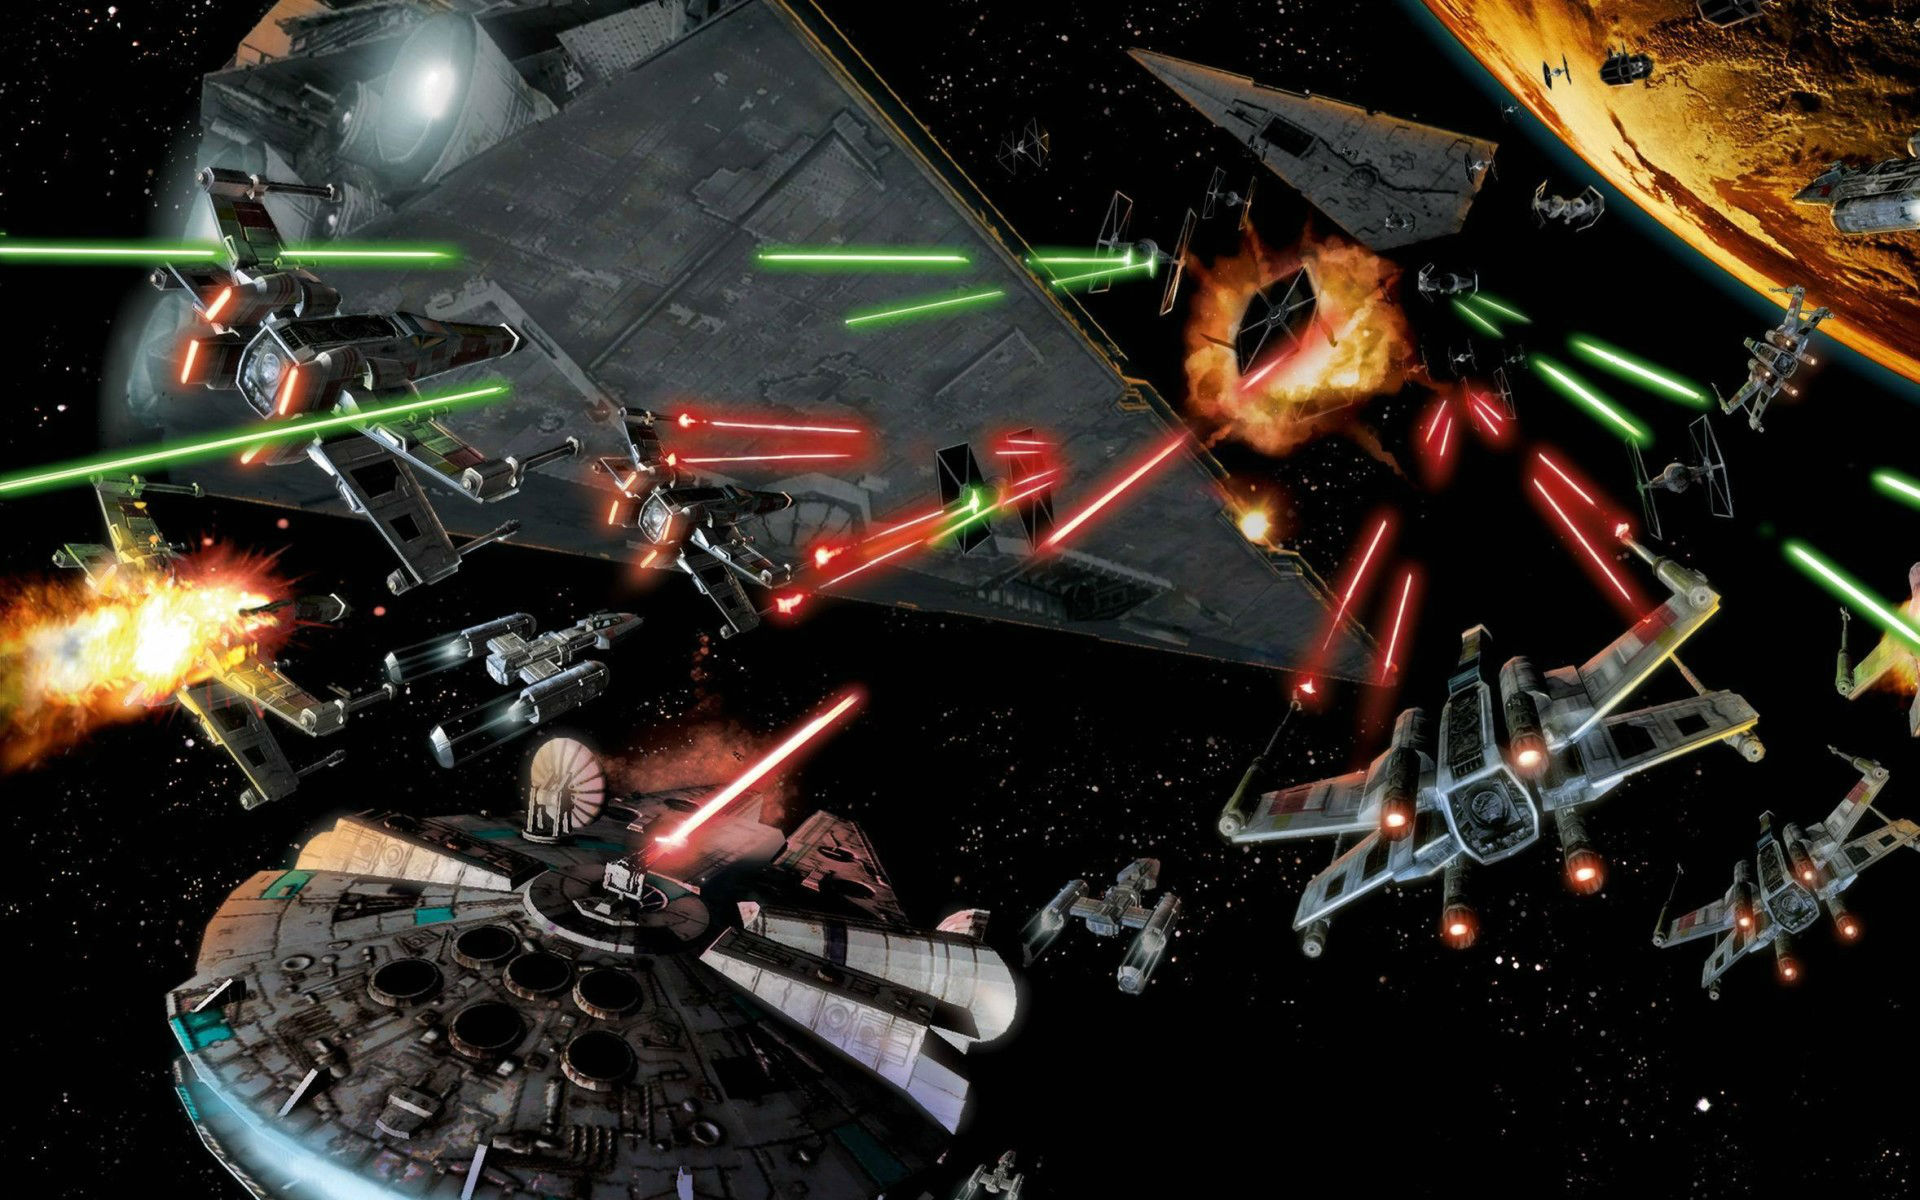 Space Battle Star Wars Millennium Falcon Art wallpaper | 1920x1200 ...